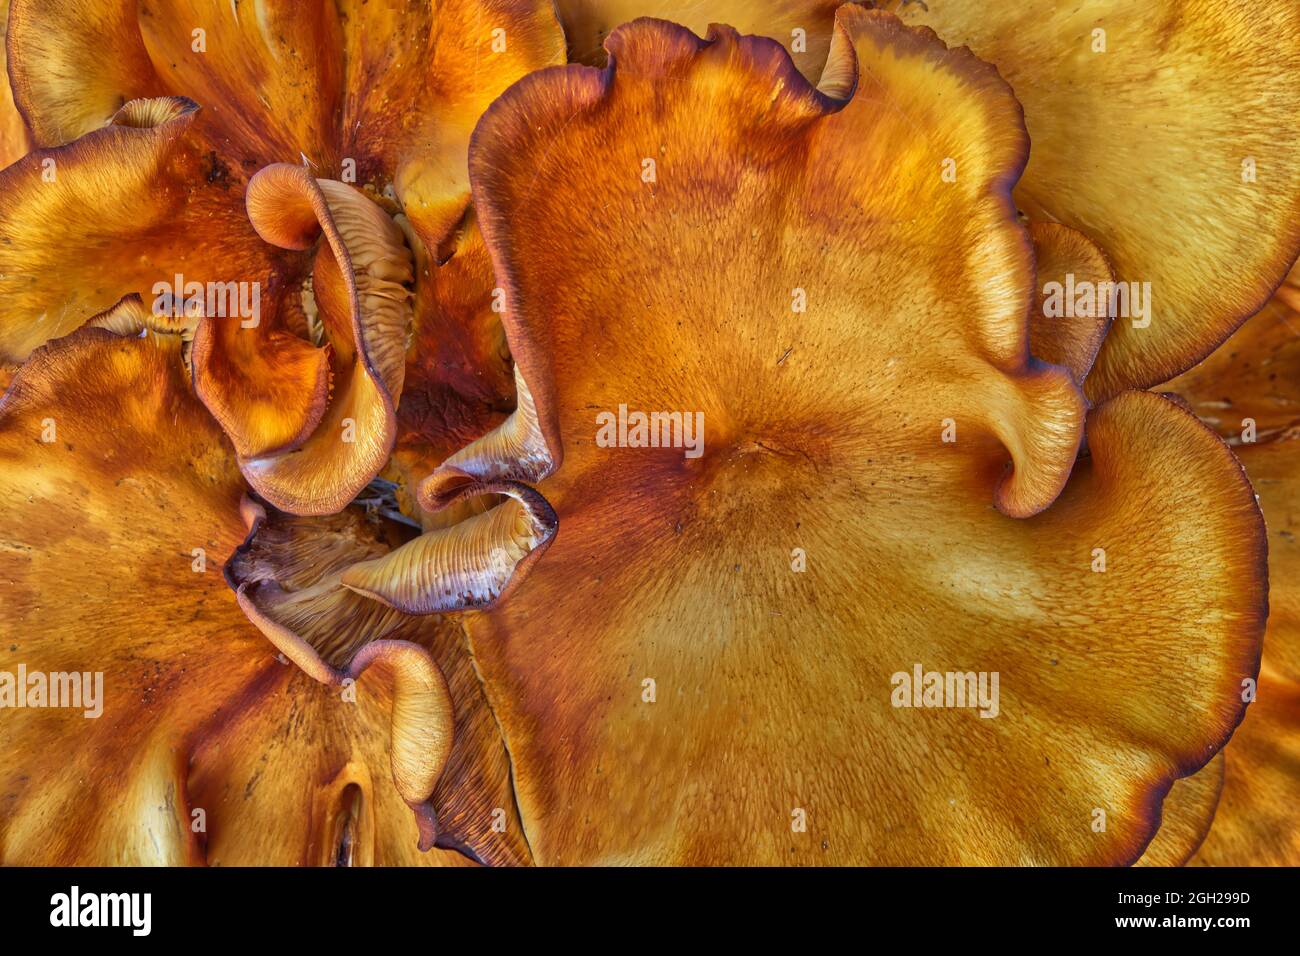 Sulphur Shelf 'Laetiporus sulphureus' growing on Coastal Live Oak stump, Texas. Stock Photo